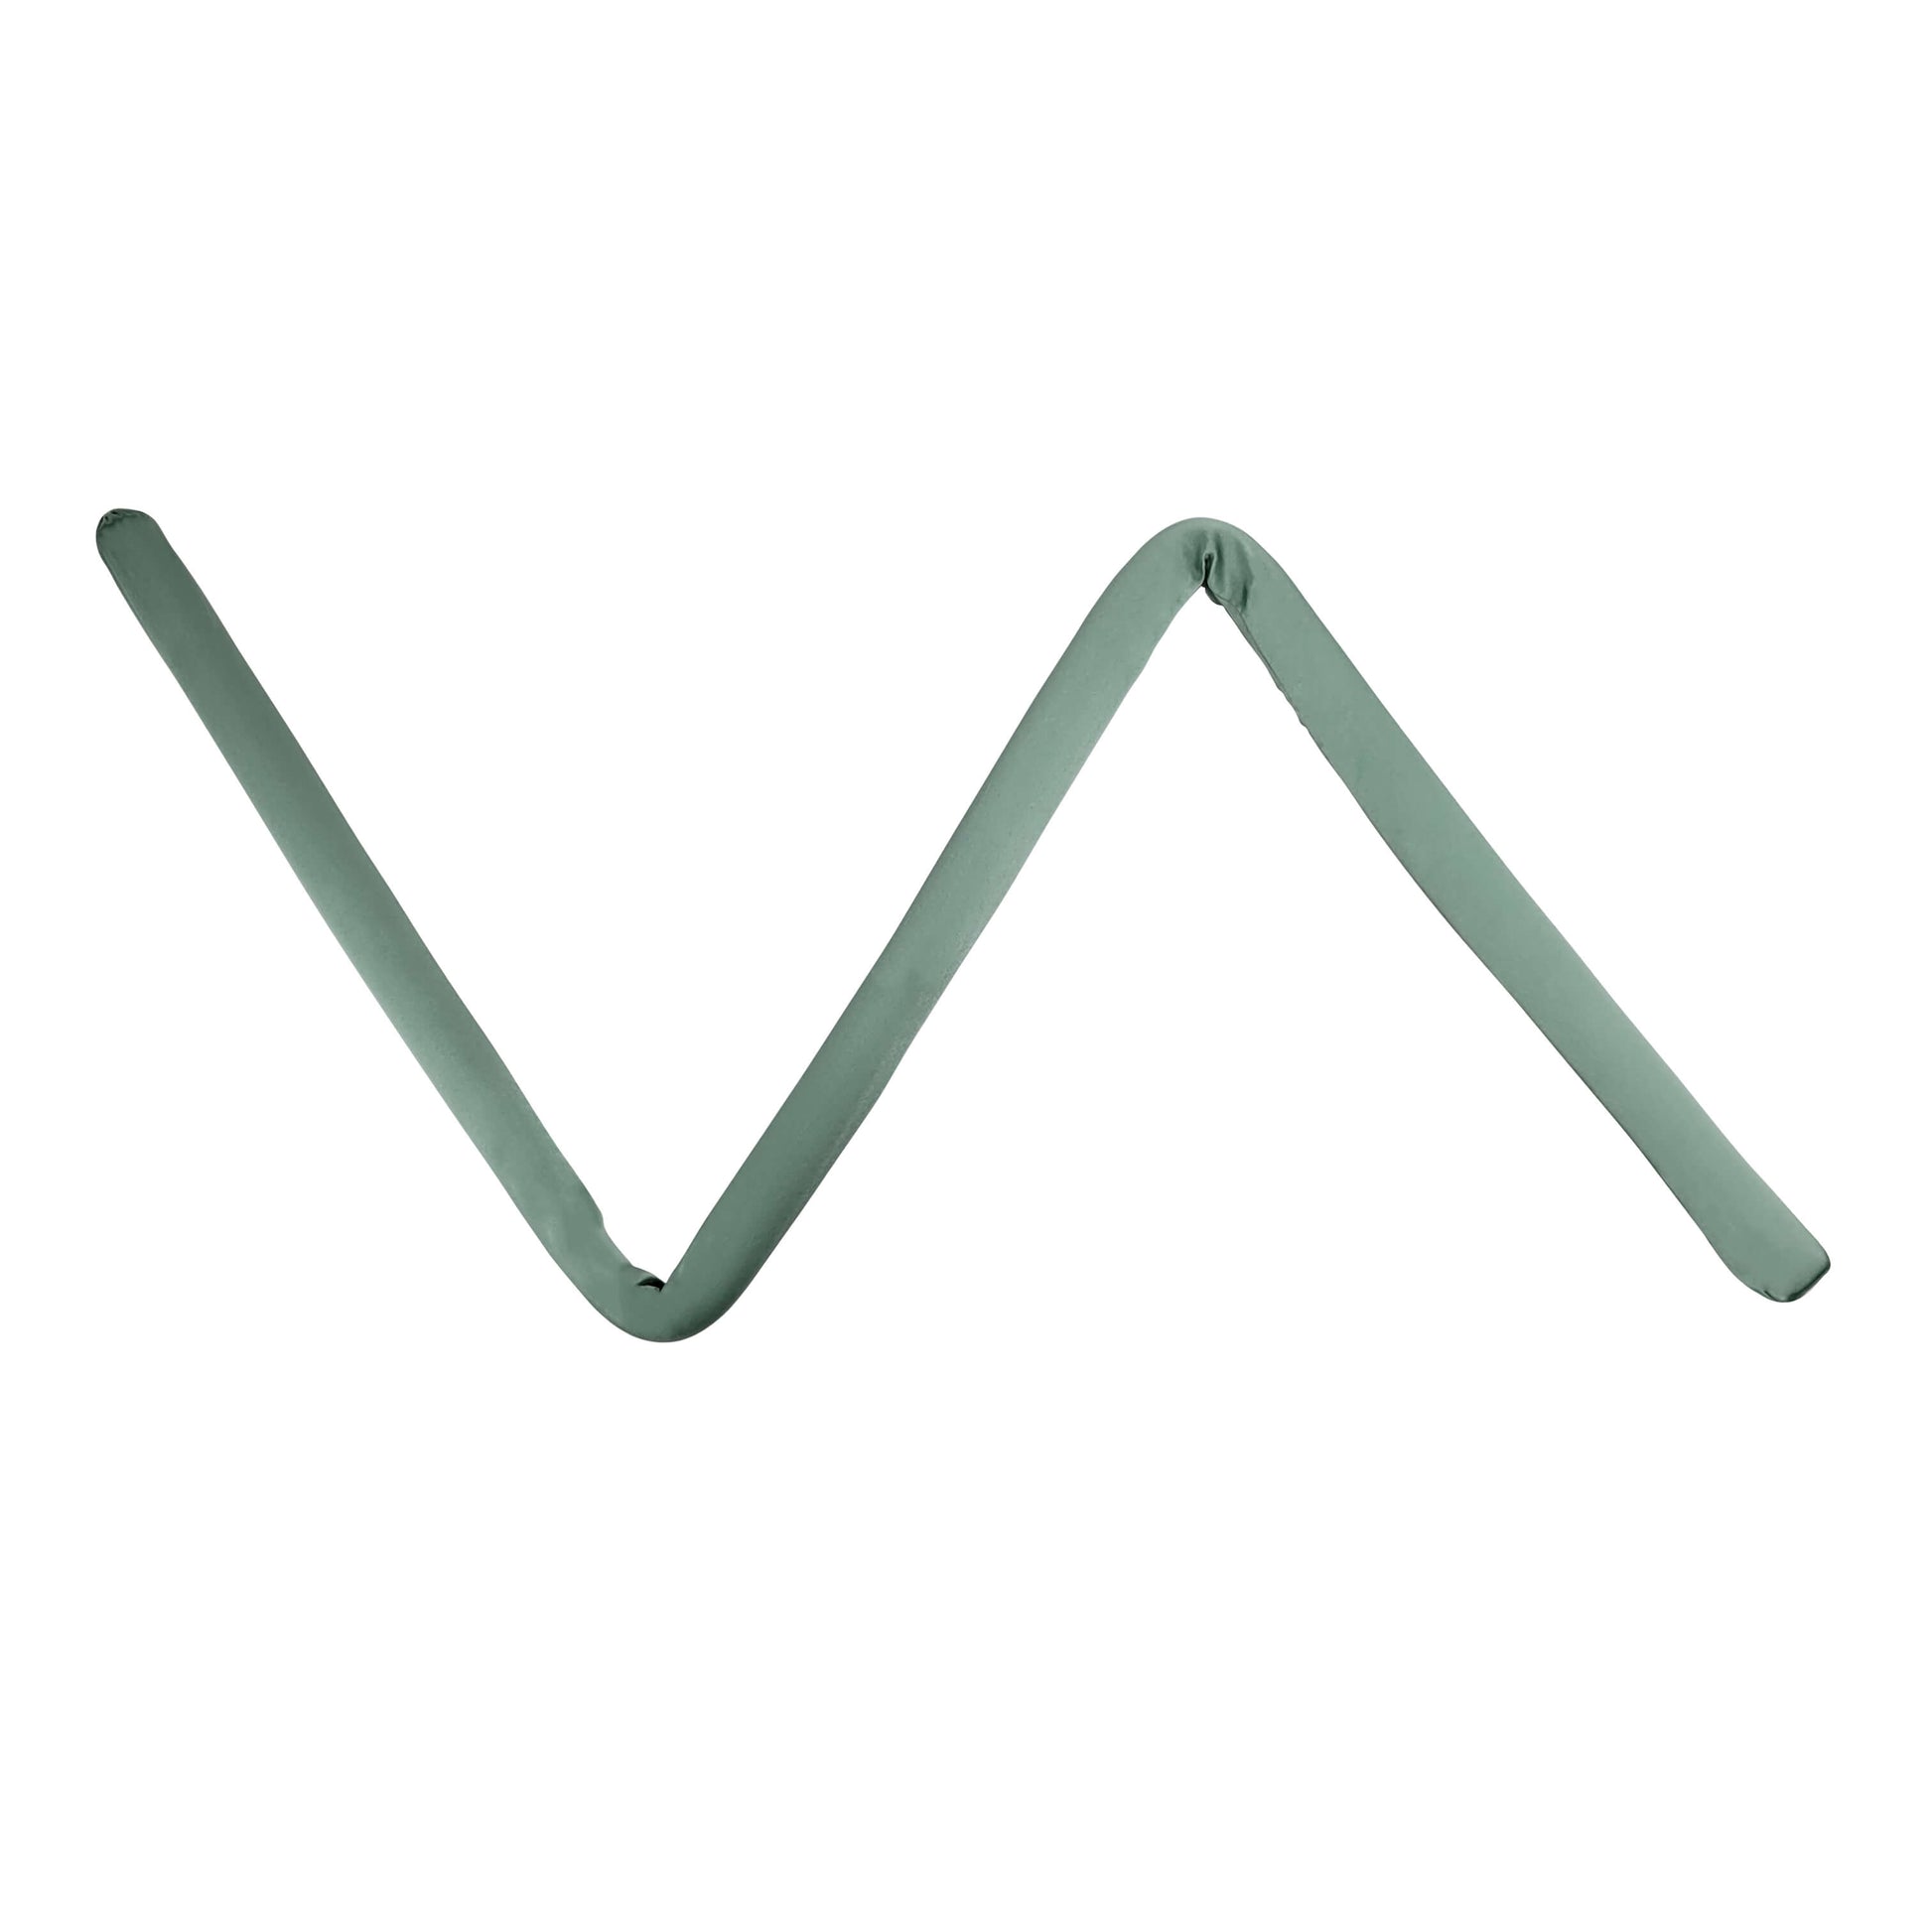 Velverie Heatless Hair Silk Curling Ribbon Kit - The Original Curler Limited Edition Green - Velverie